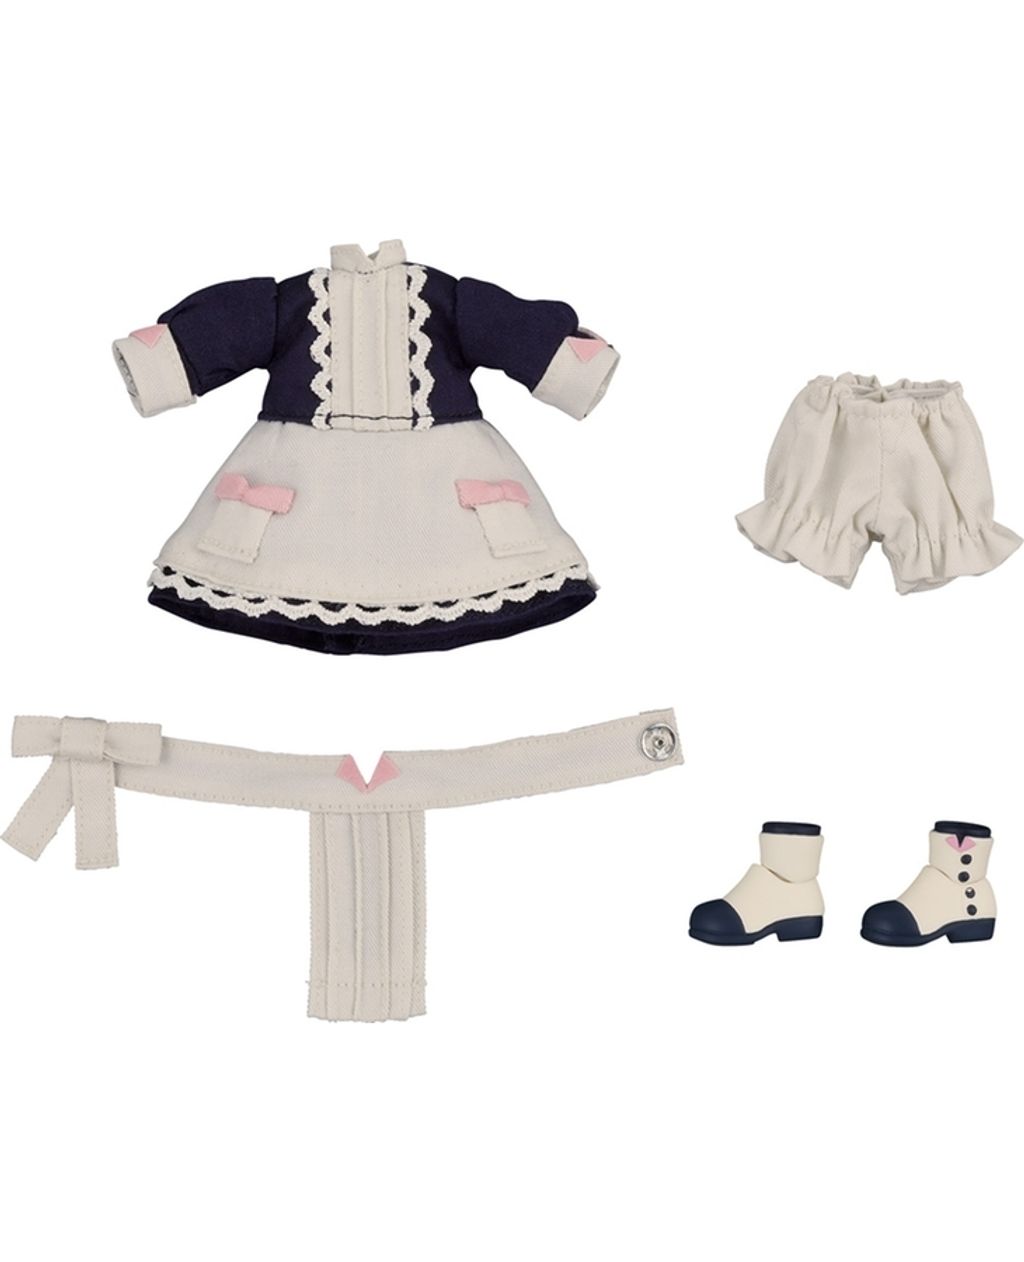 Nendoroid Doll Outfit Set Emilico.jpg